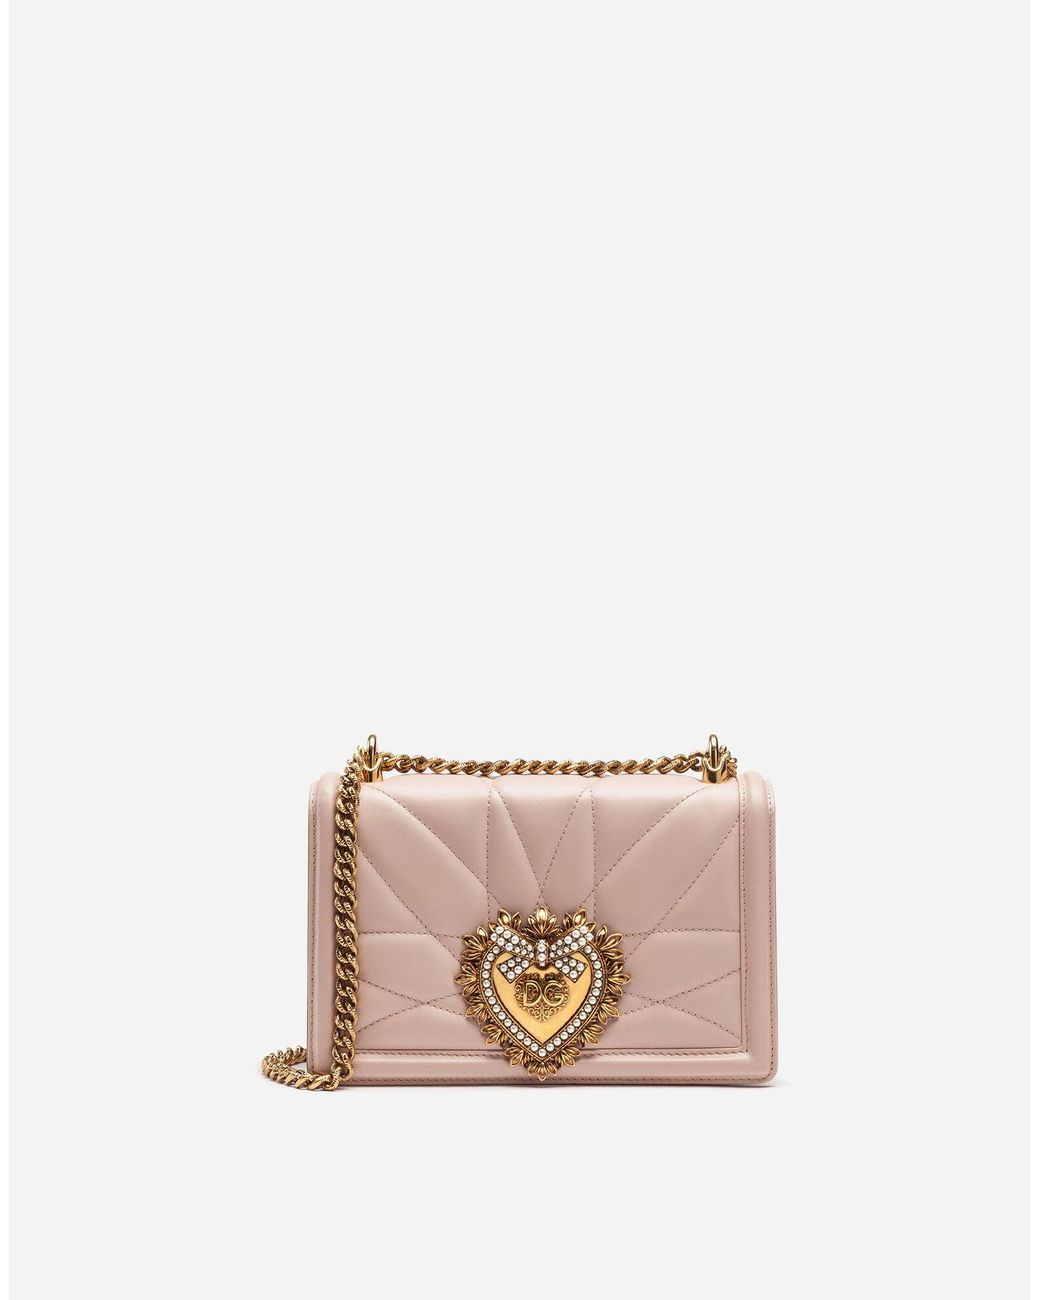 Dolce & Gabbana Leather Medium Devotion Bag in Pale Pink (Pink) - Lyst